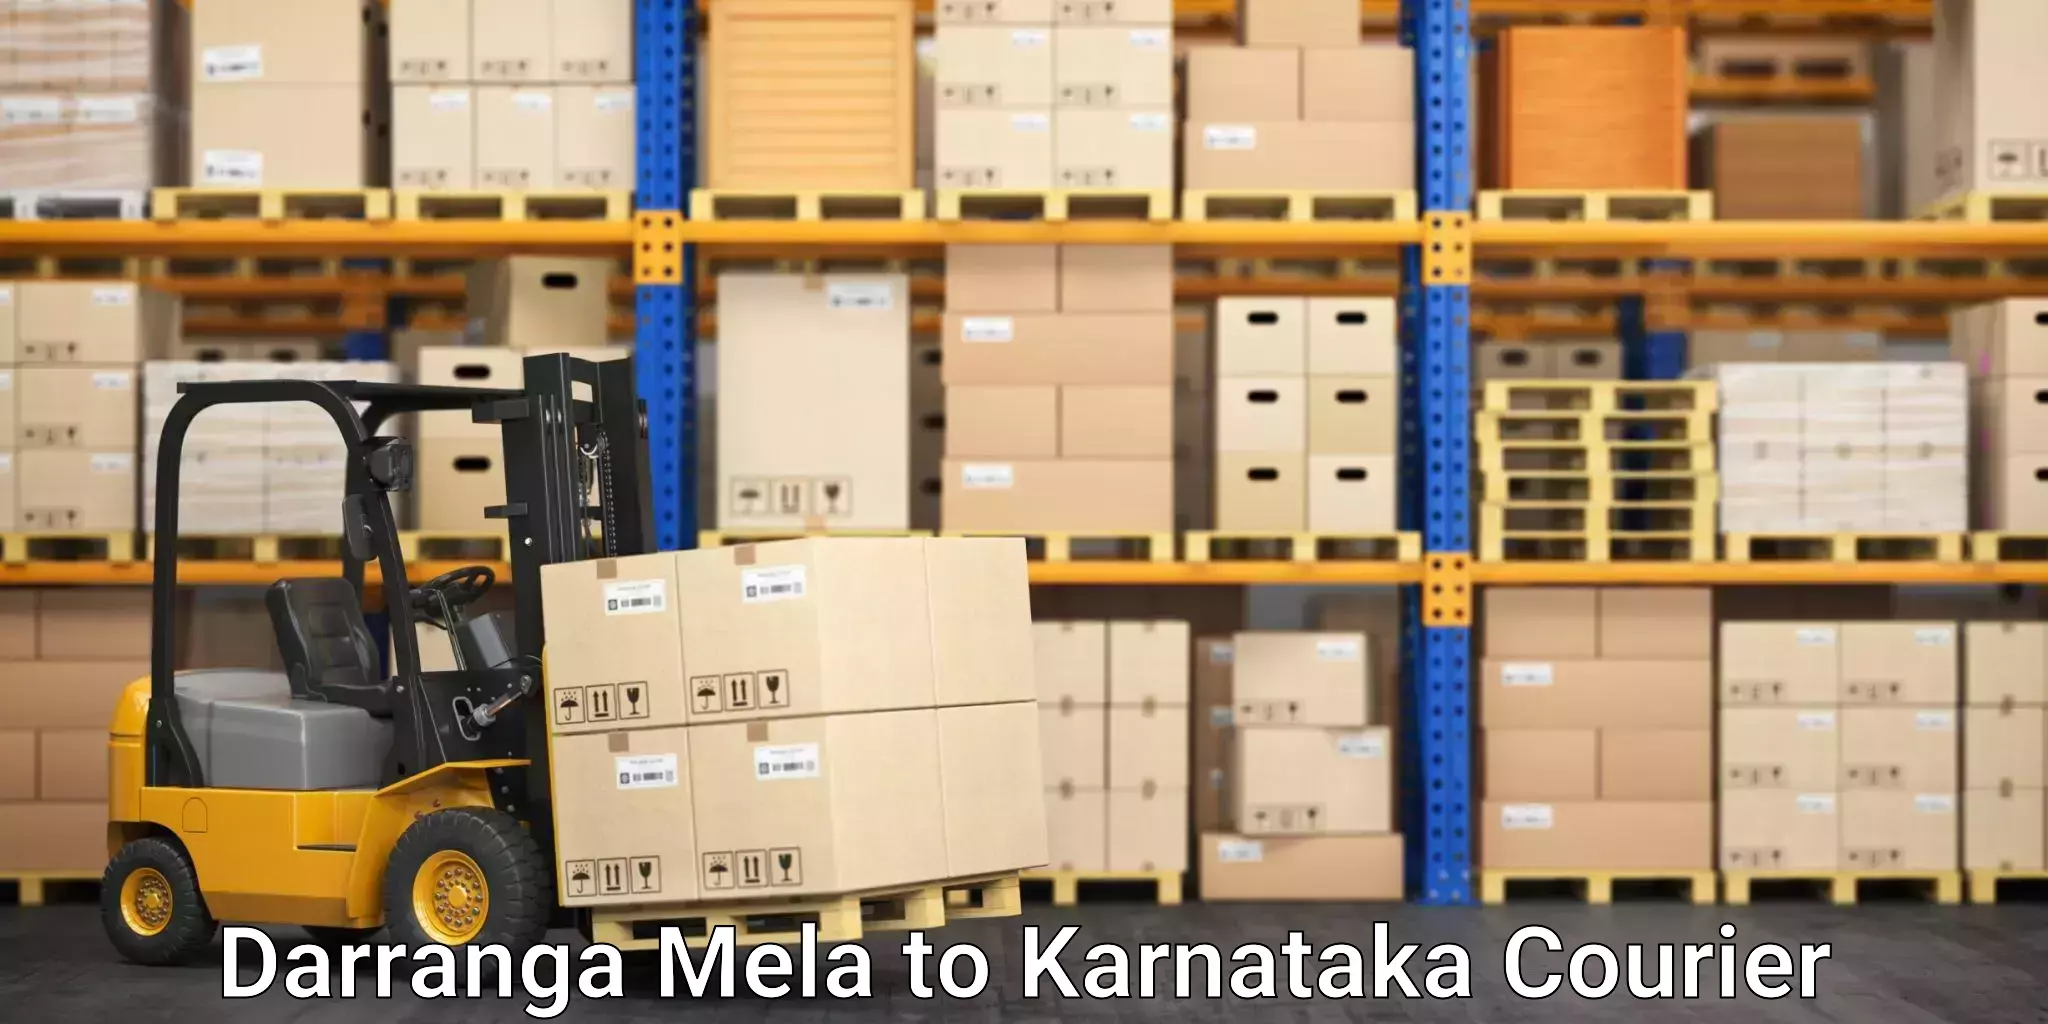 Nationwide shipping services Darranga Mela to Tiptur